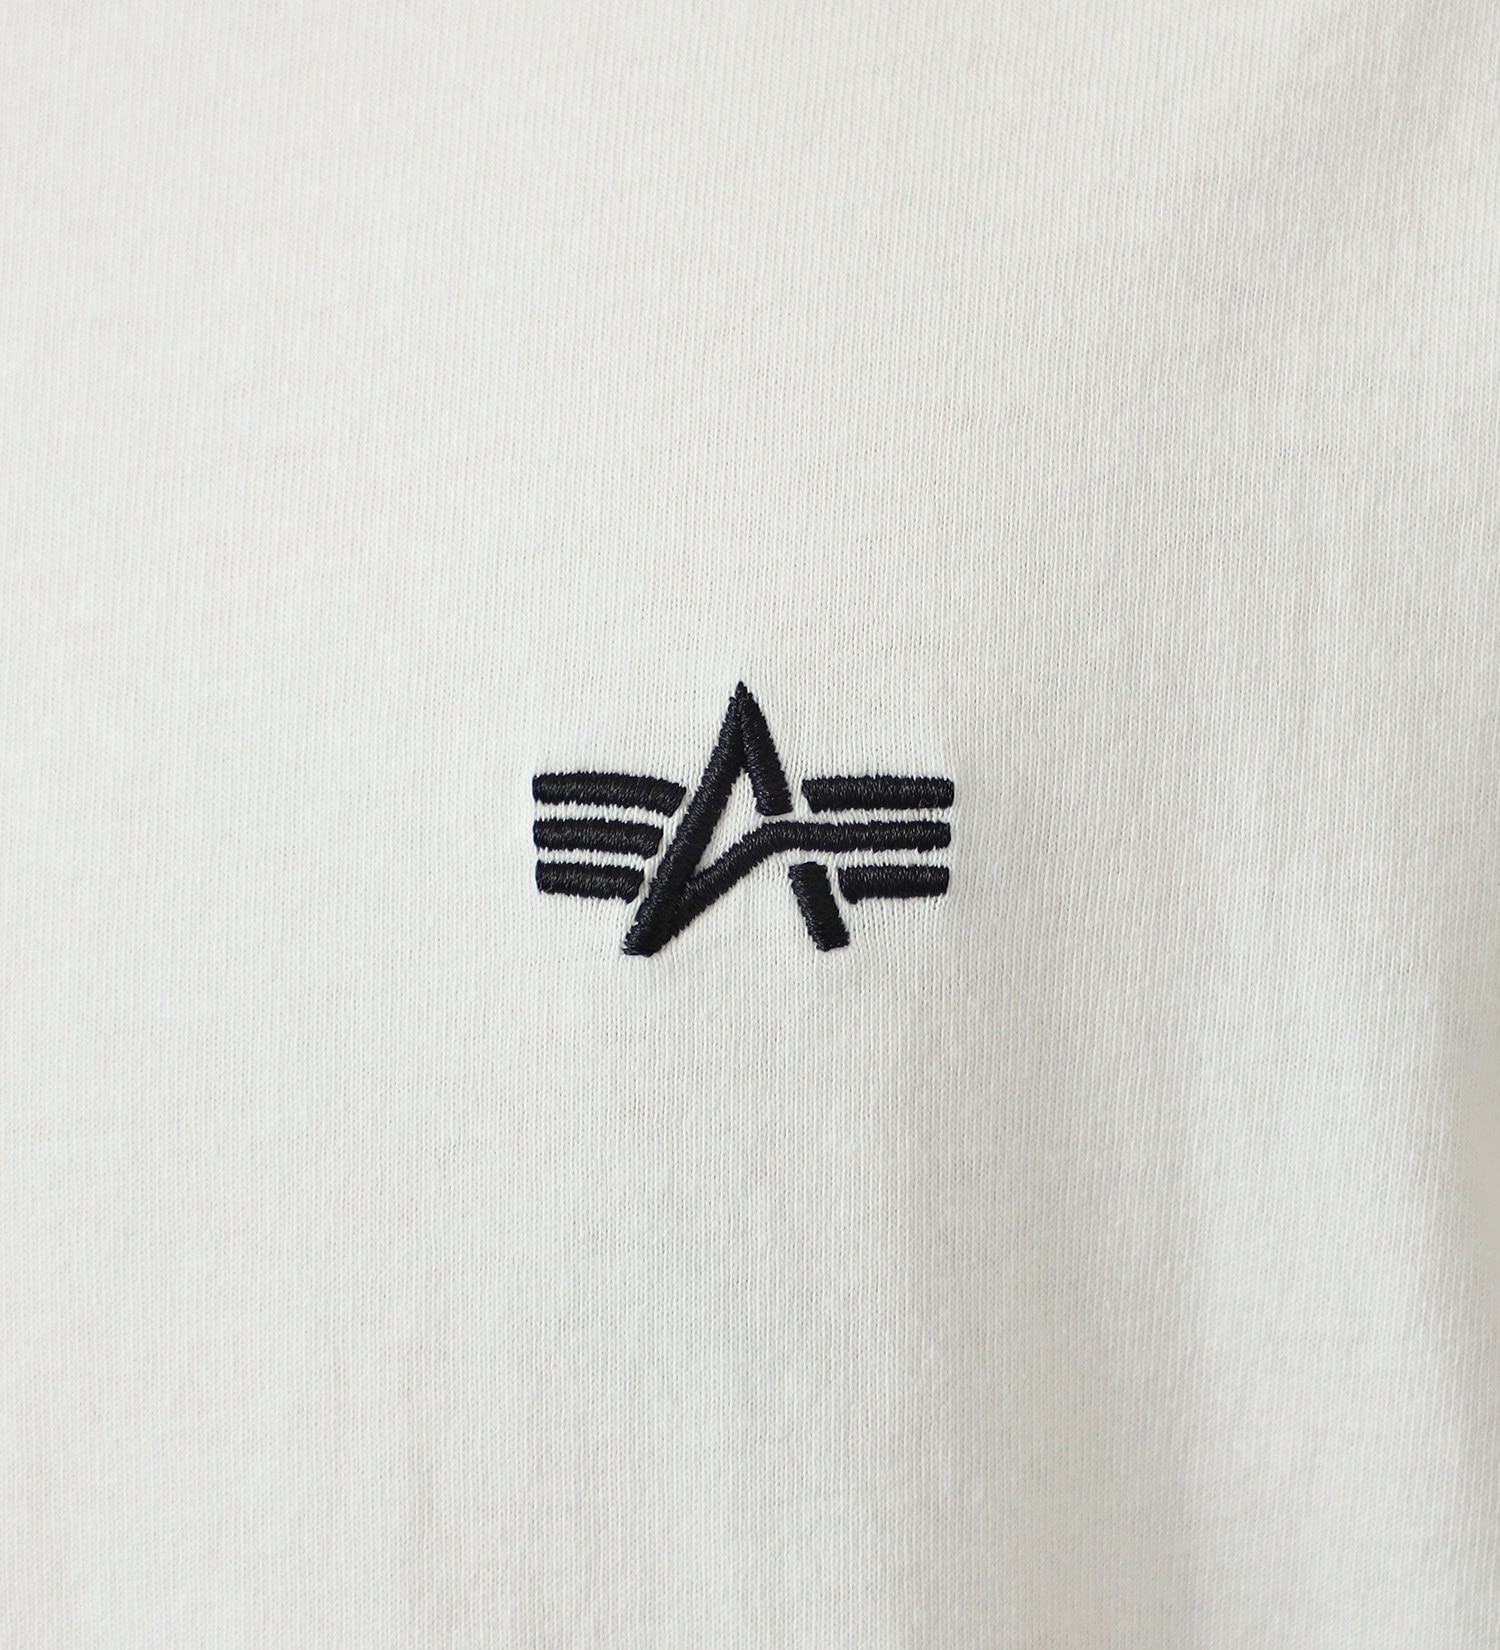 ALPHA(アルファ)の【GW SALE】バックプリントボックスロゴ 長袖Tシャツ(WIRE)|トップス/Tシャツ/カットソー/メンズ|ホワイト